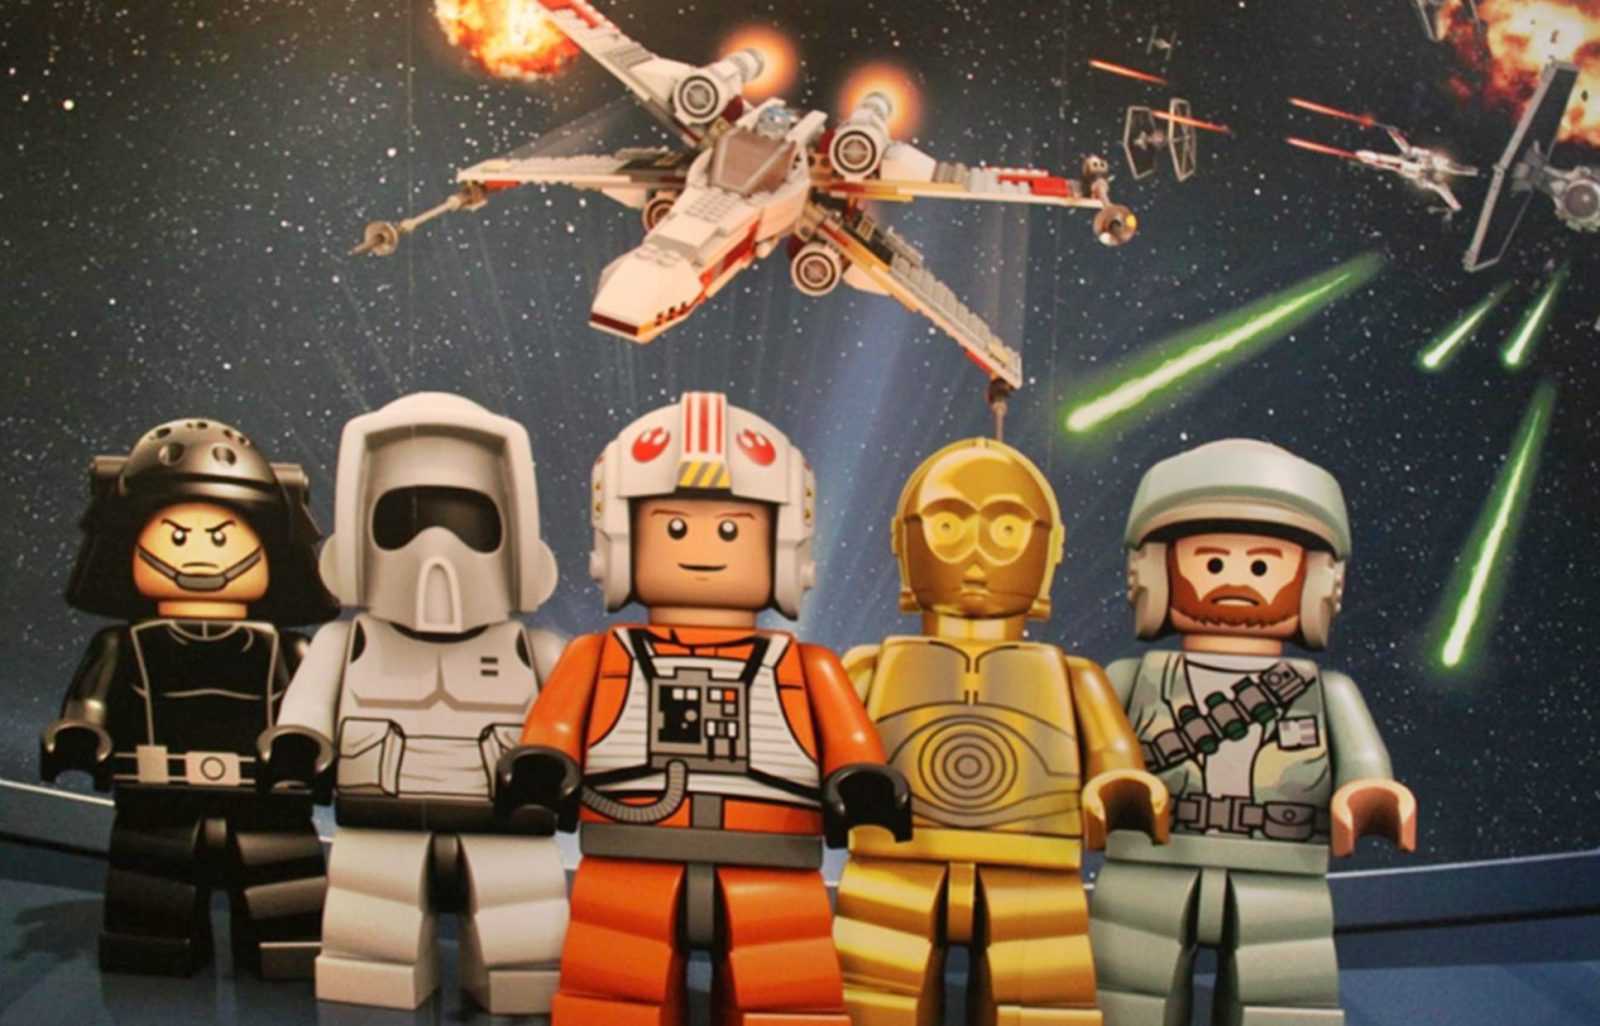 Lego Star Wars 3 Wars Free Download